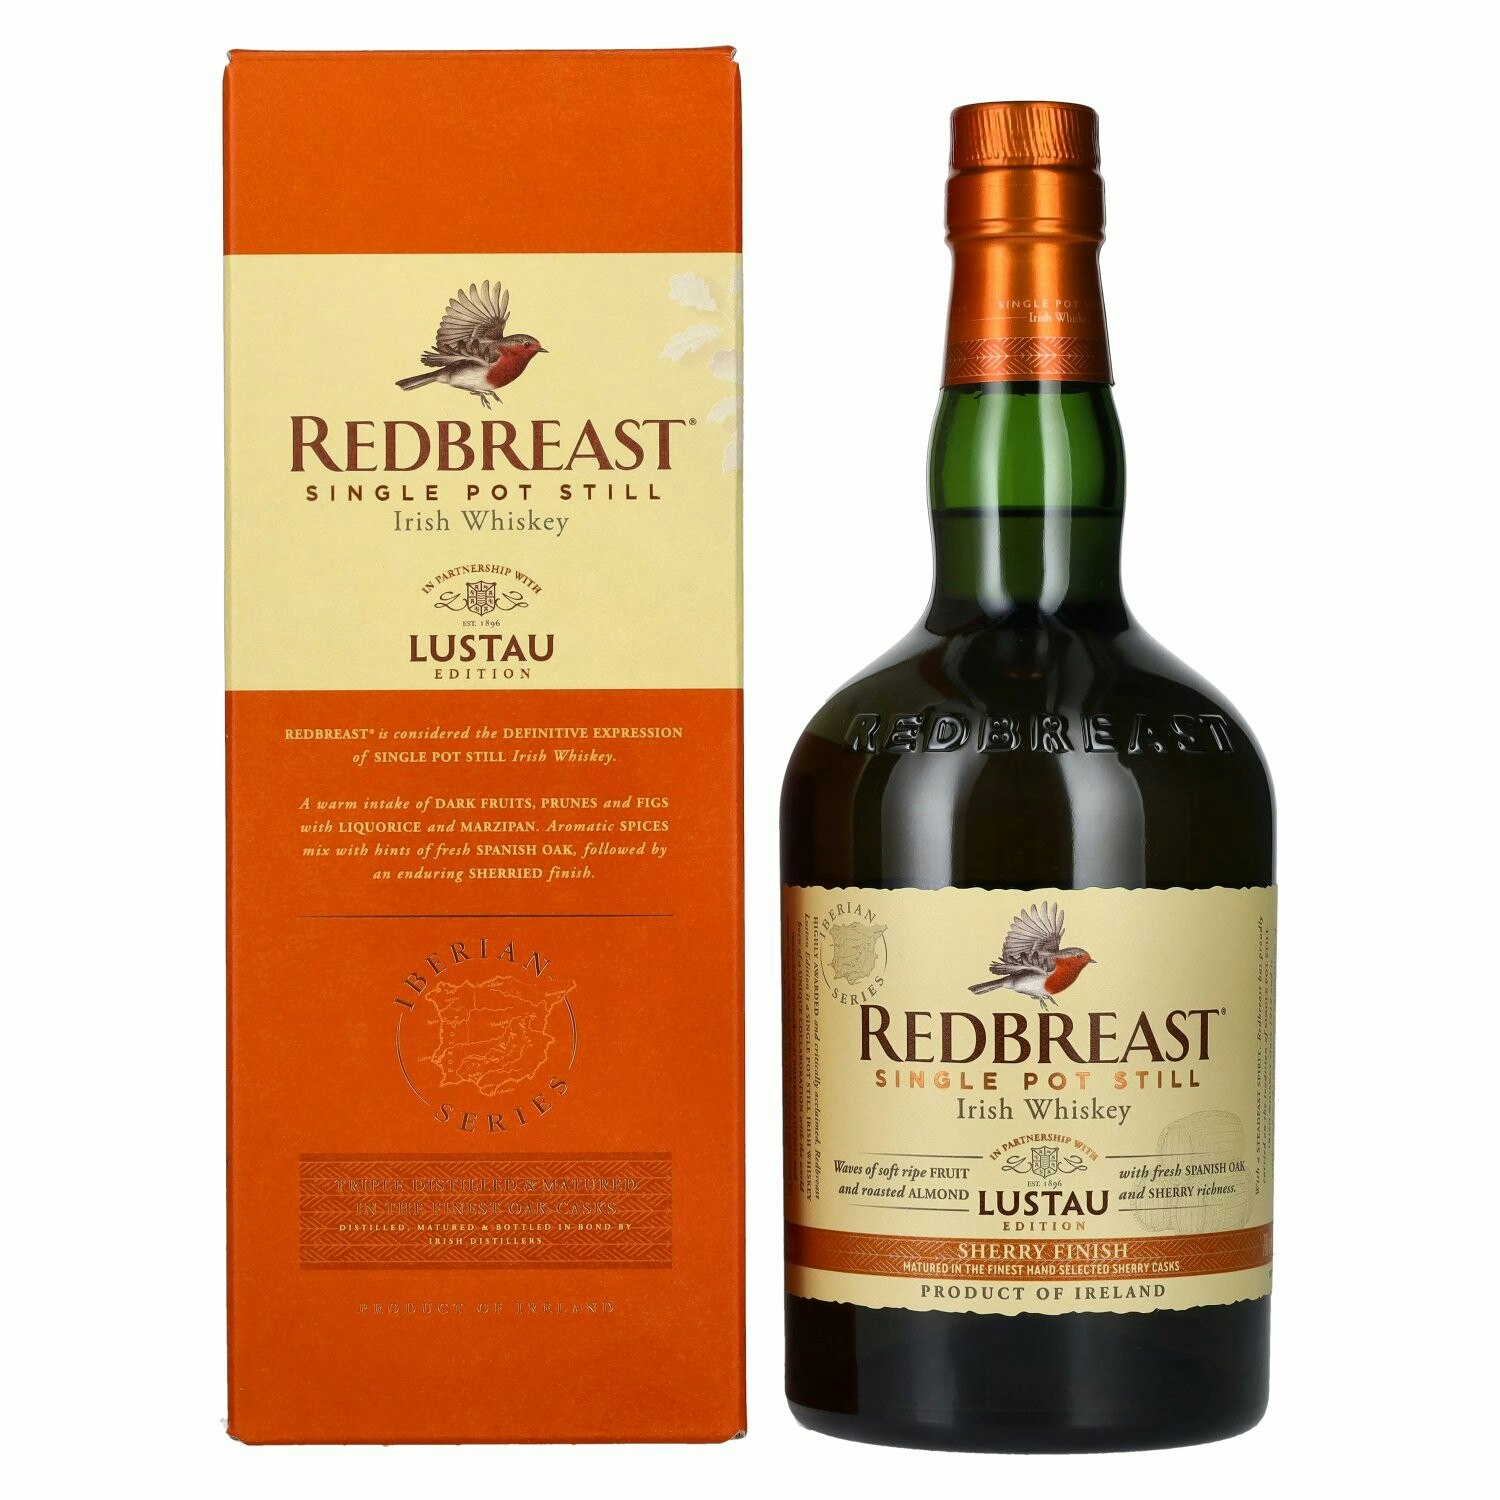 Redbreast Single Pot Still Irish Whiskey LUSTAU EDITION Sherry Finish 46% Vol. 0,7l in Giftbox